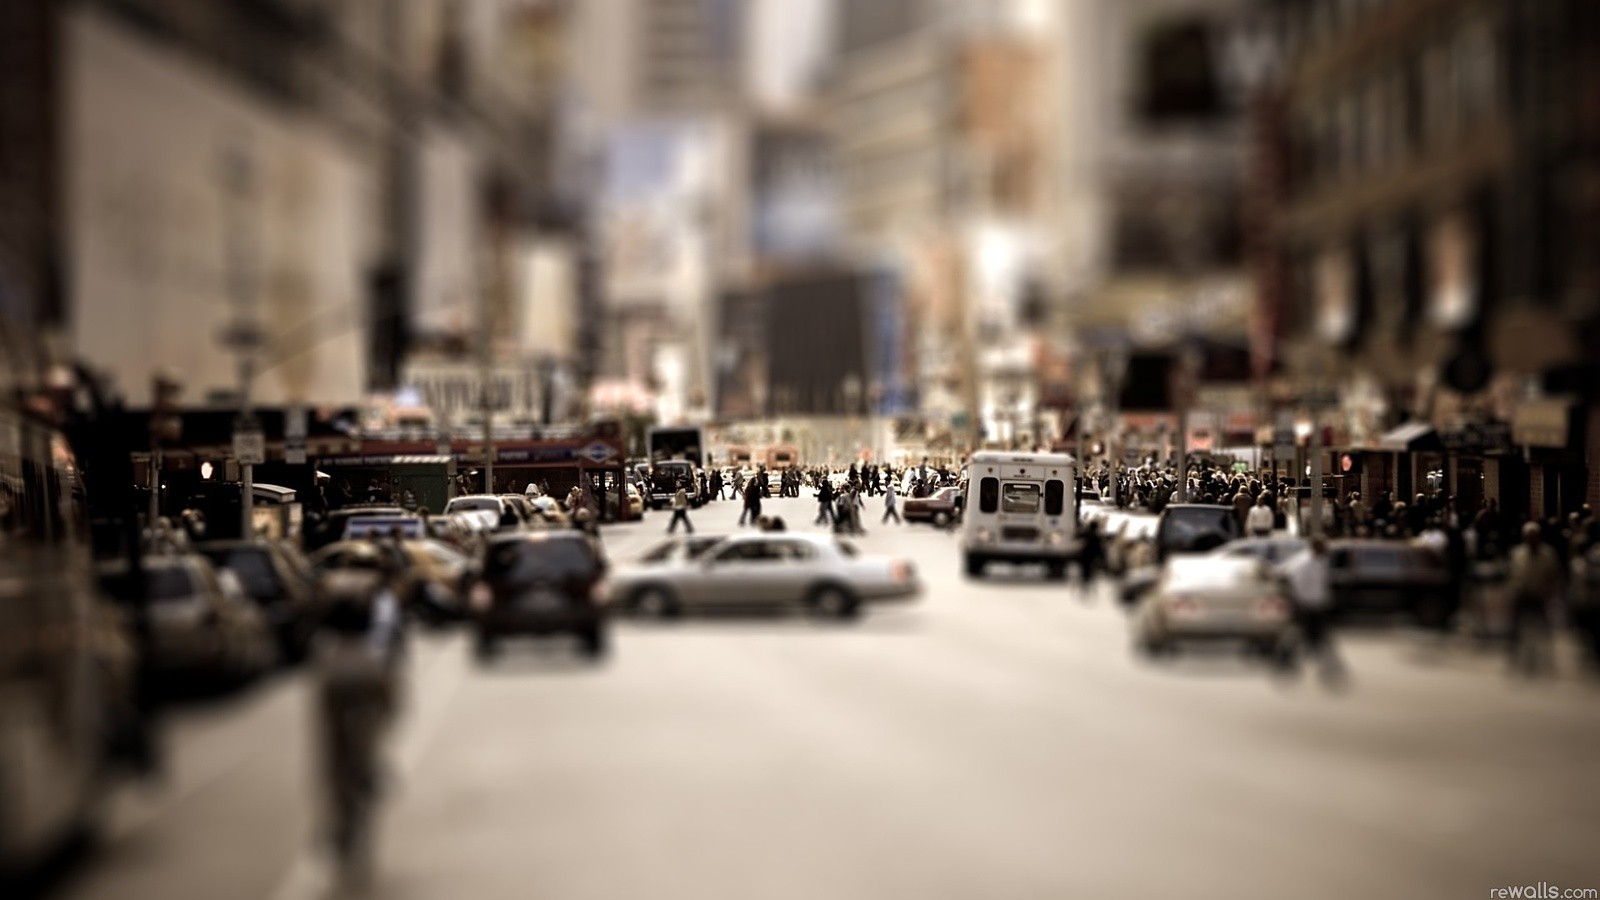 General 1600x900 city urban digital art street traffic cityscape vehicle people miniatures